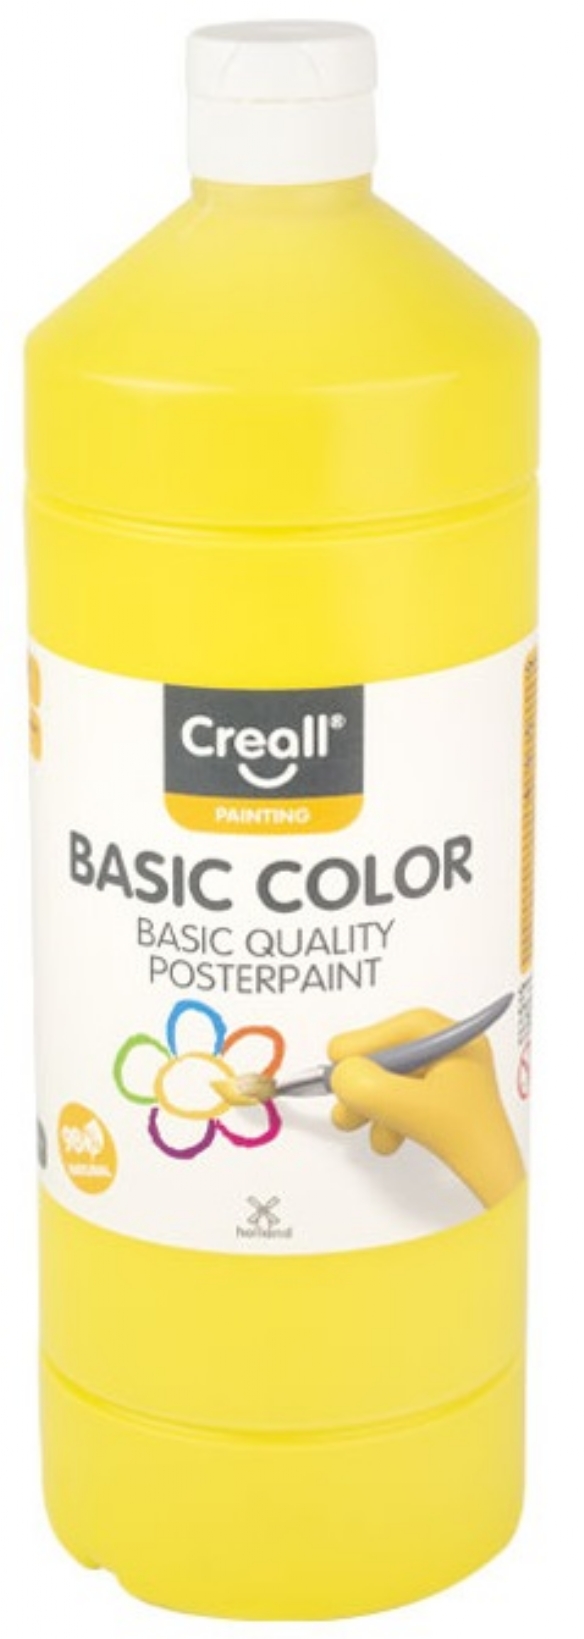 Basic-color plakkaatverf, 1000 ml, 02 primair geel kopen?